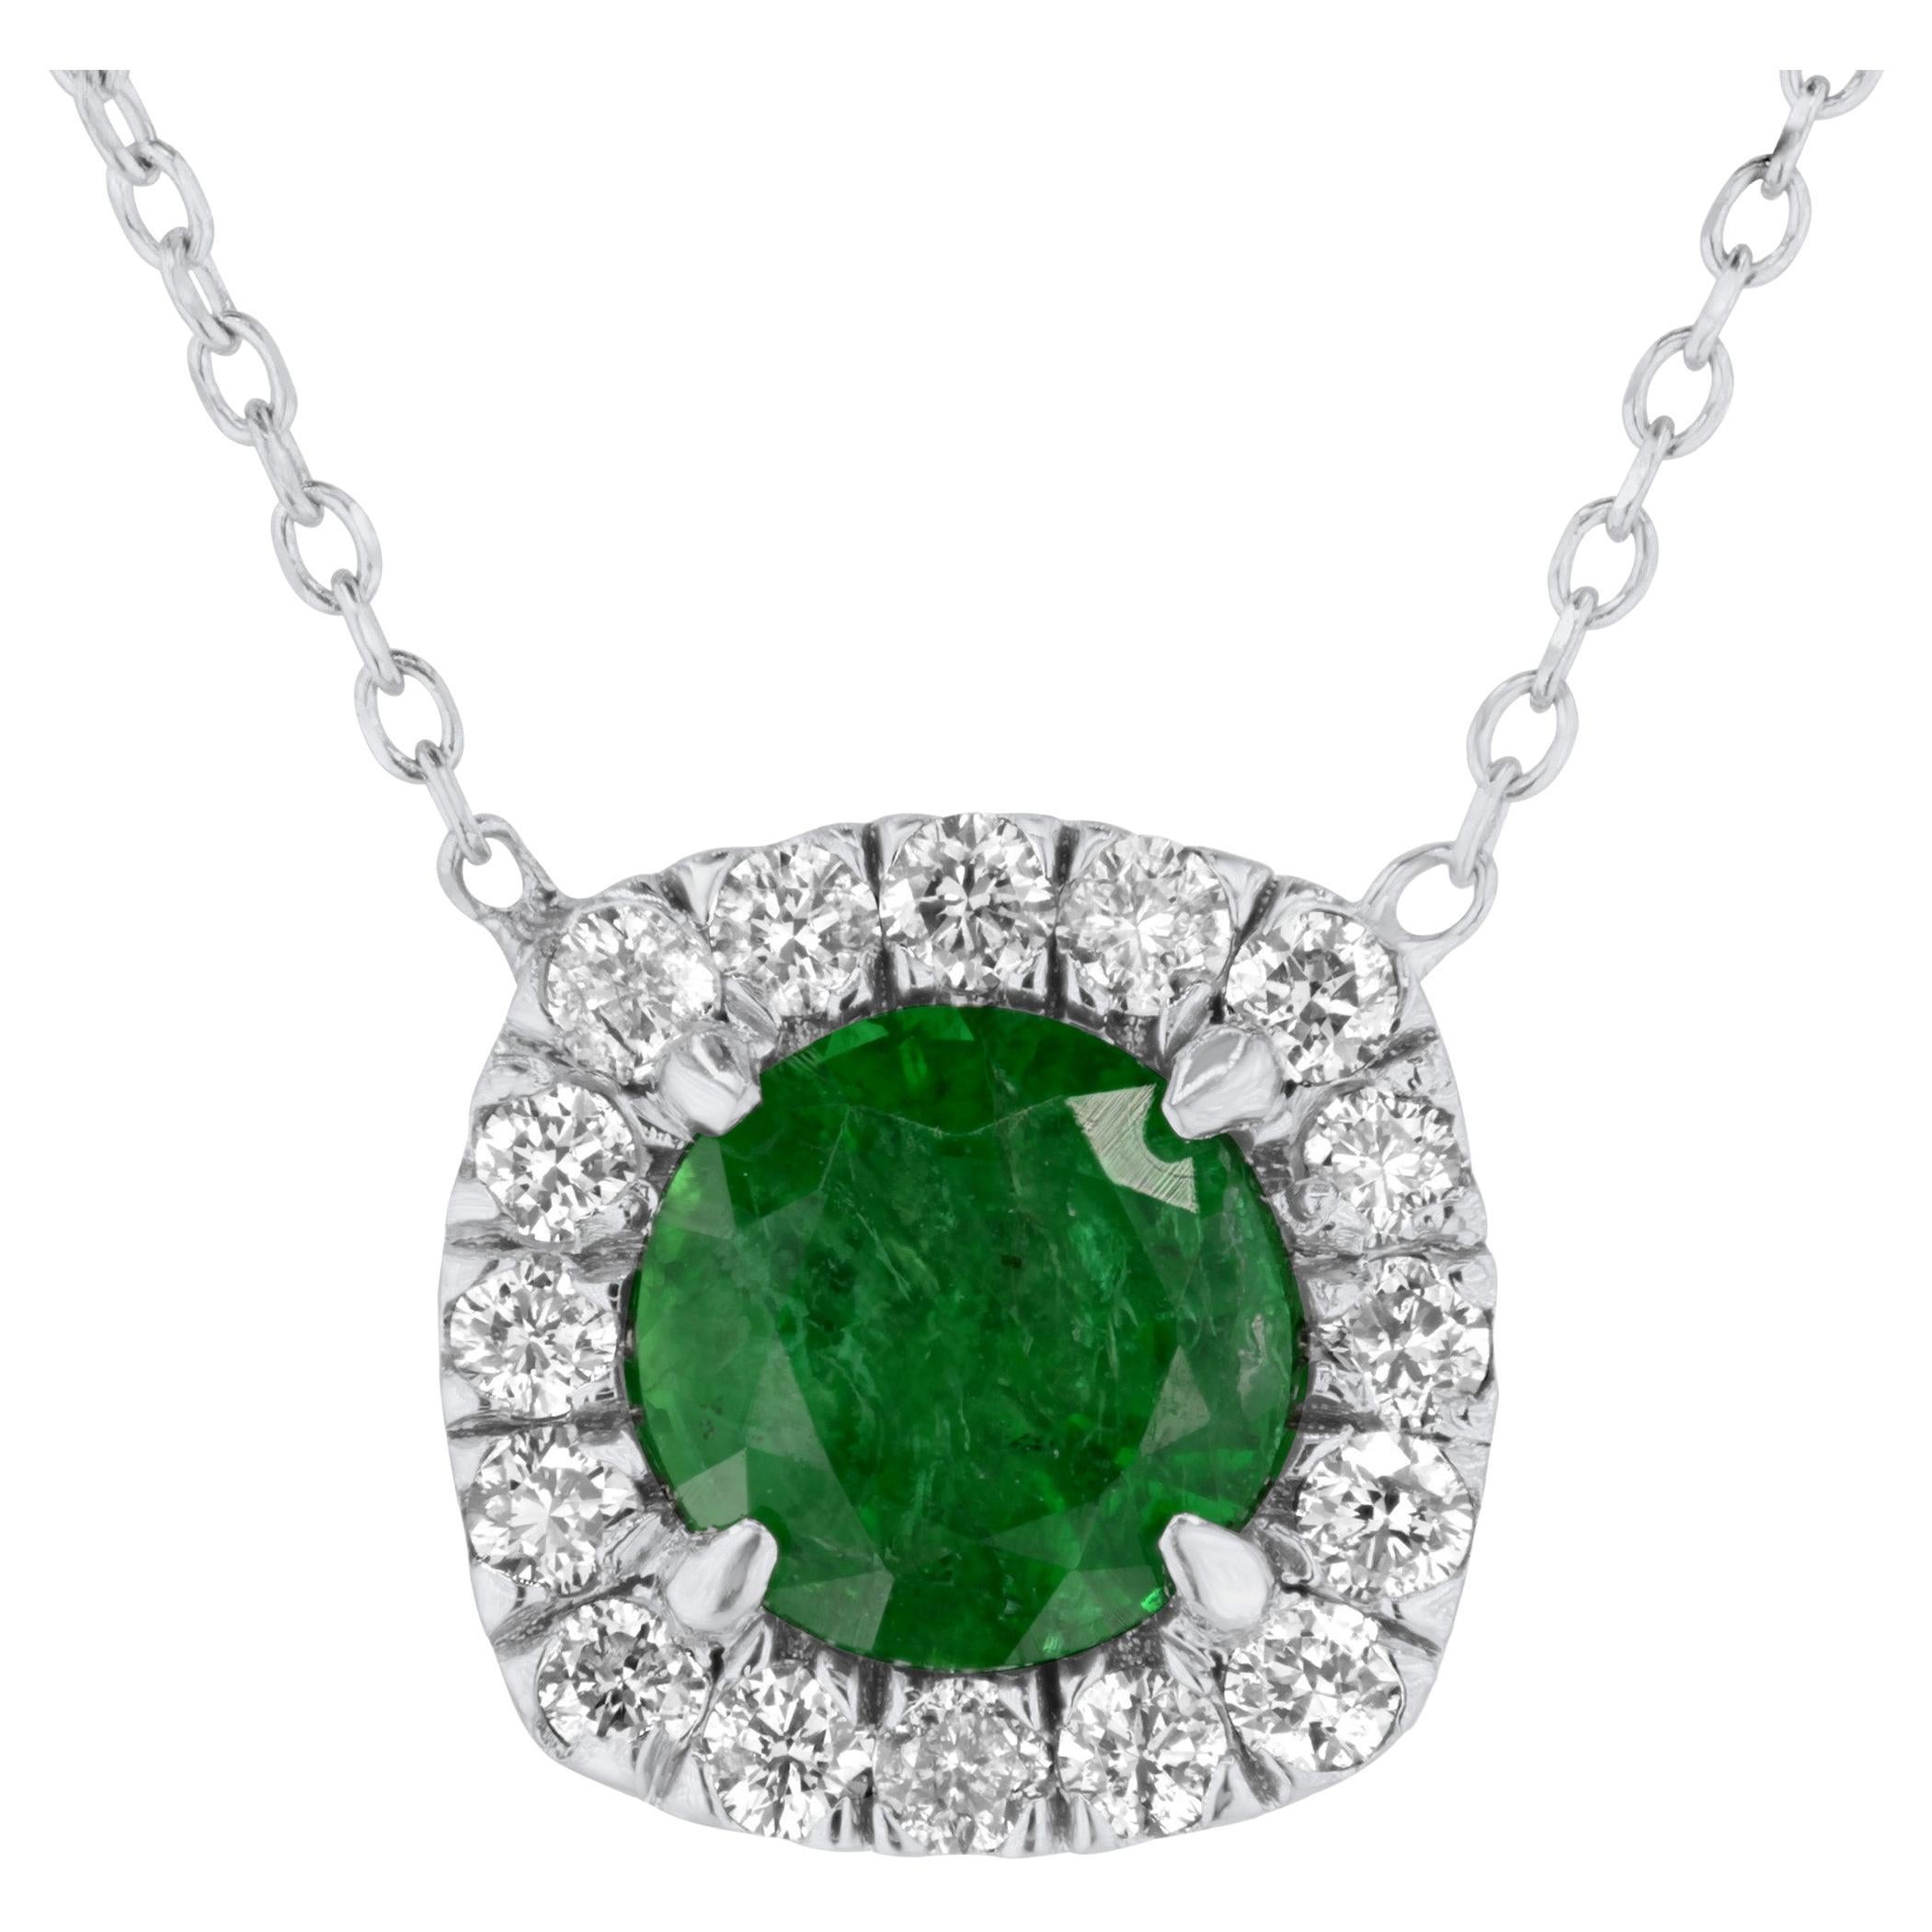 0.76 Carat Round Emerald Pendant with 0.24 Carat Diamond Halo in 14k ref2120 For Sale